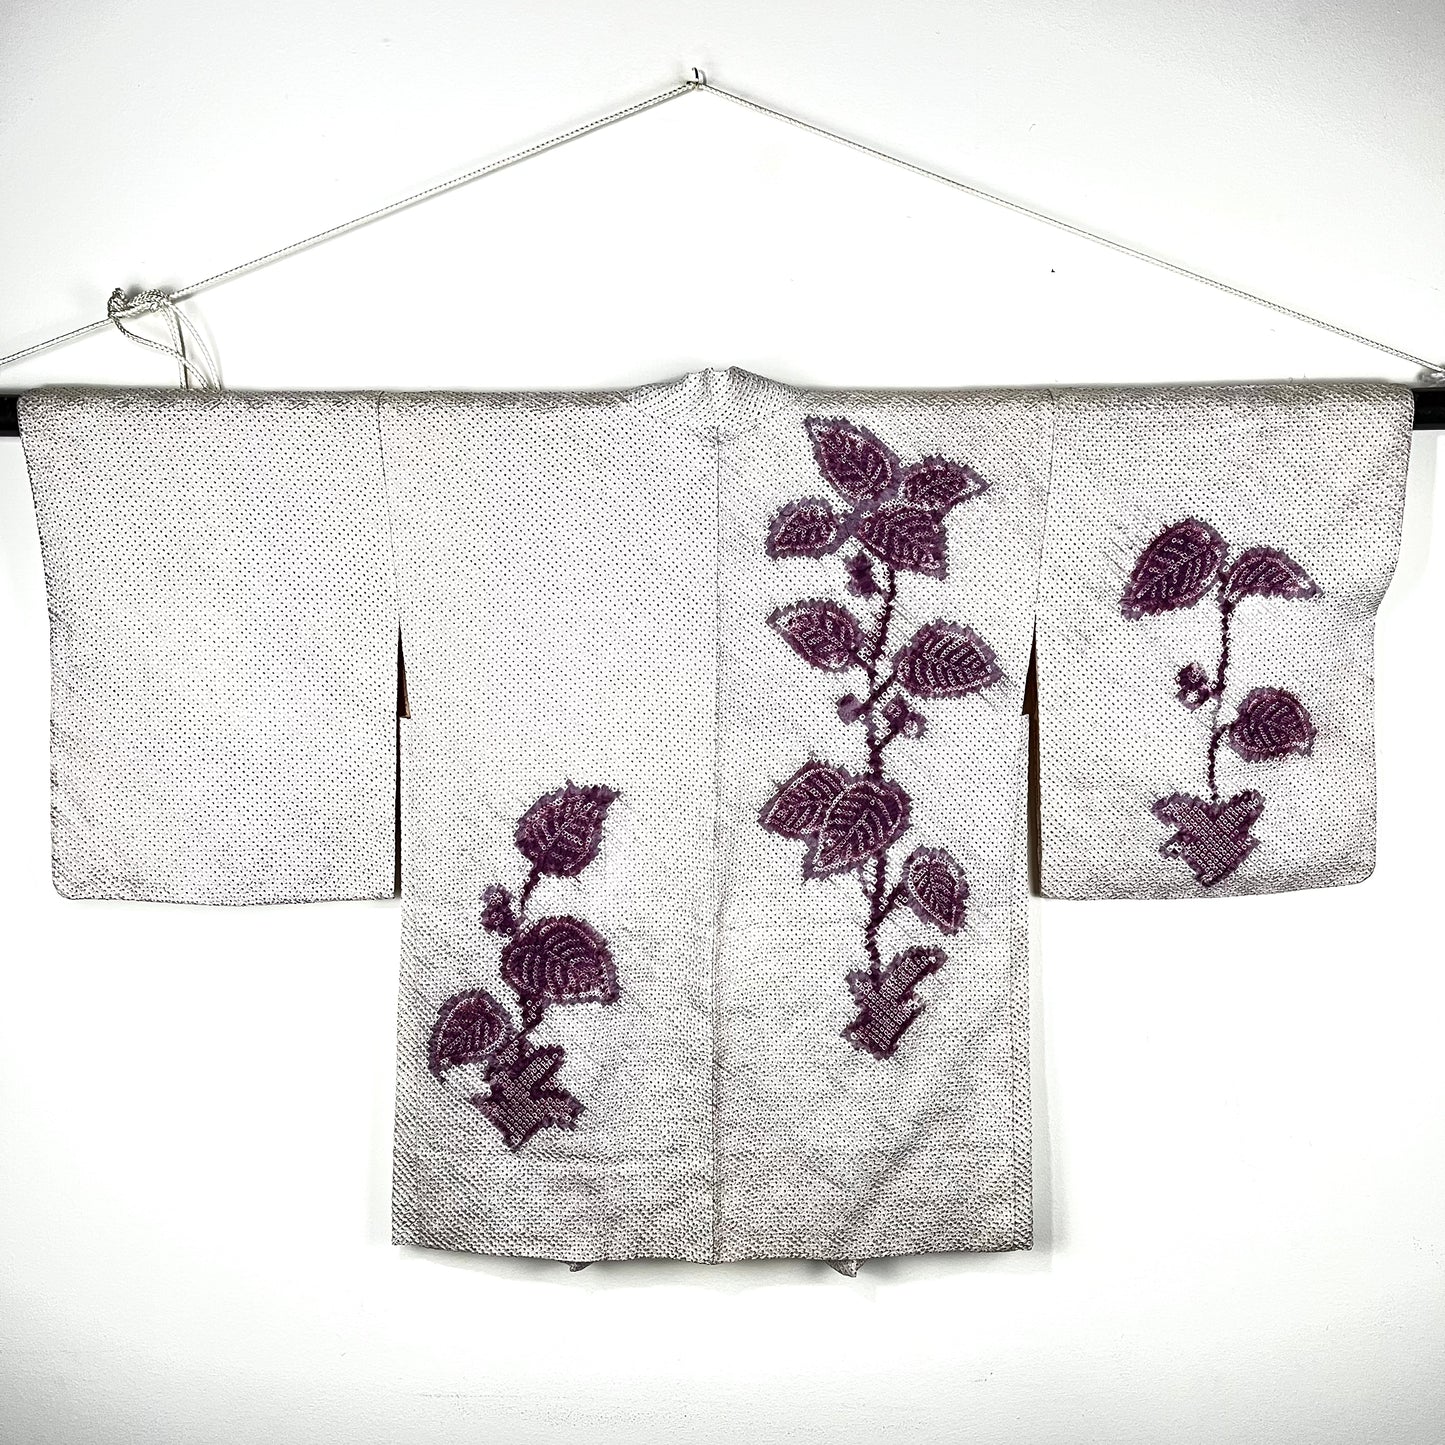 Vintage Japanese Silk Haori Coat in Shibori Tie-dye Style White & Purple 28"L